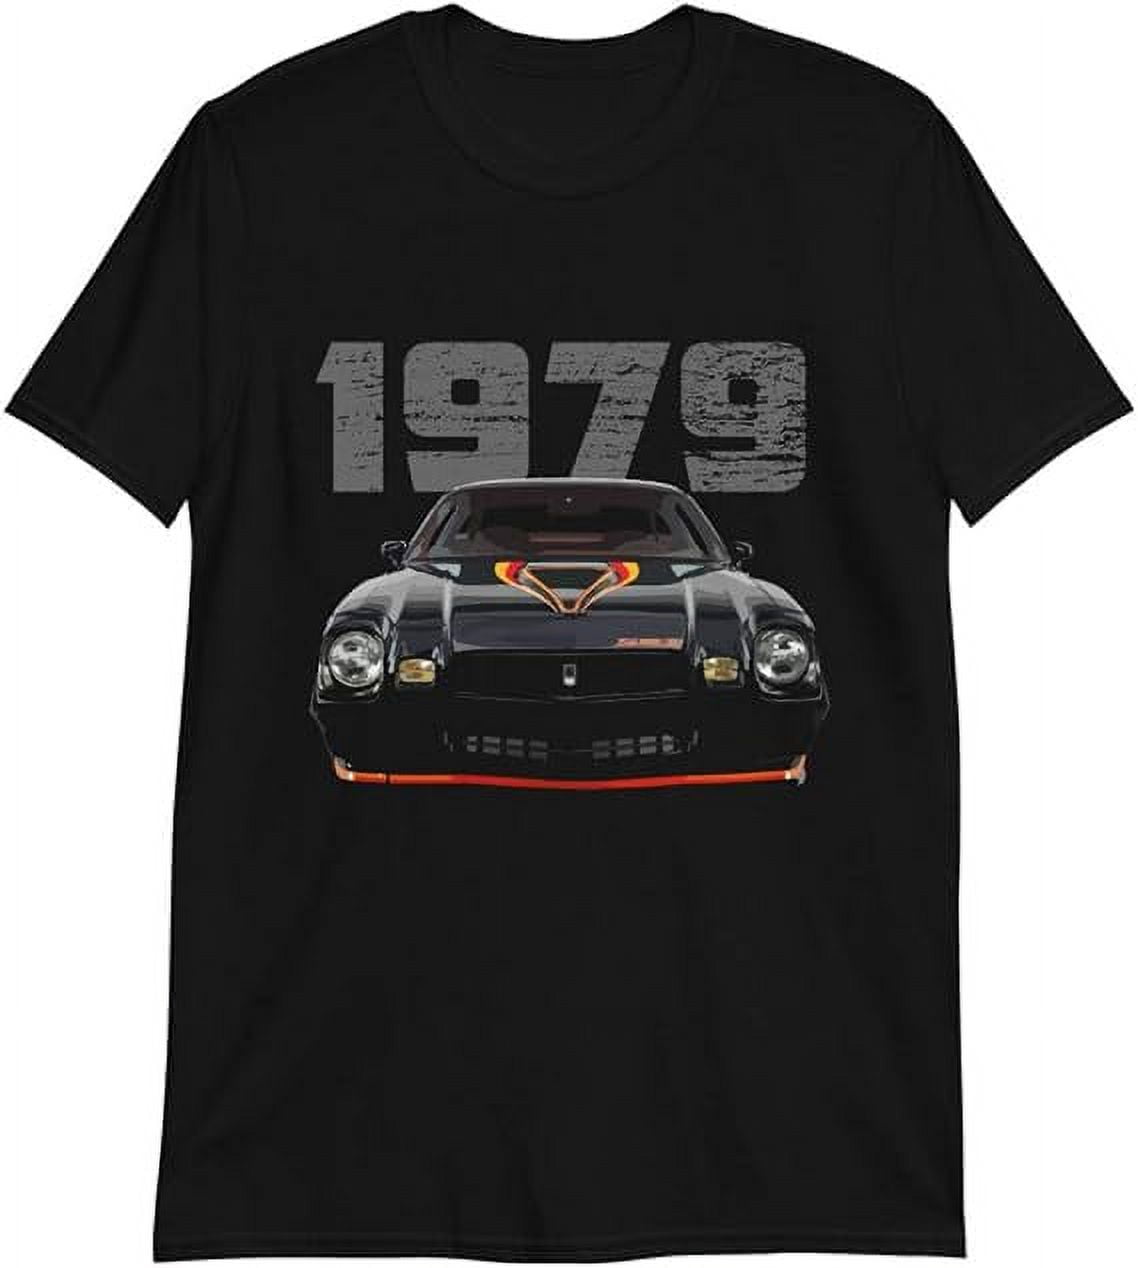 1979 Camaro Z28 Classic Car Short-Sleeve Unisex T-Shirt Black - Walmart.com